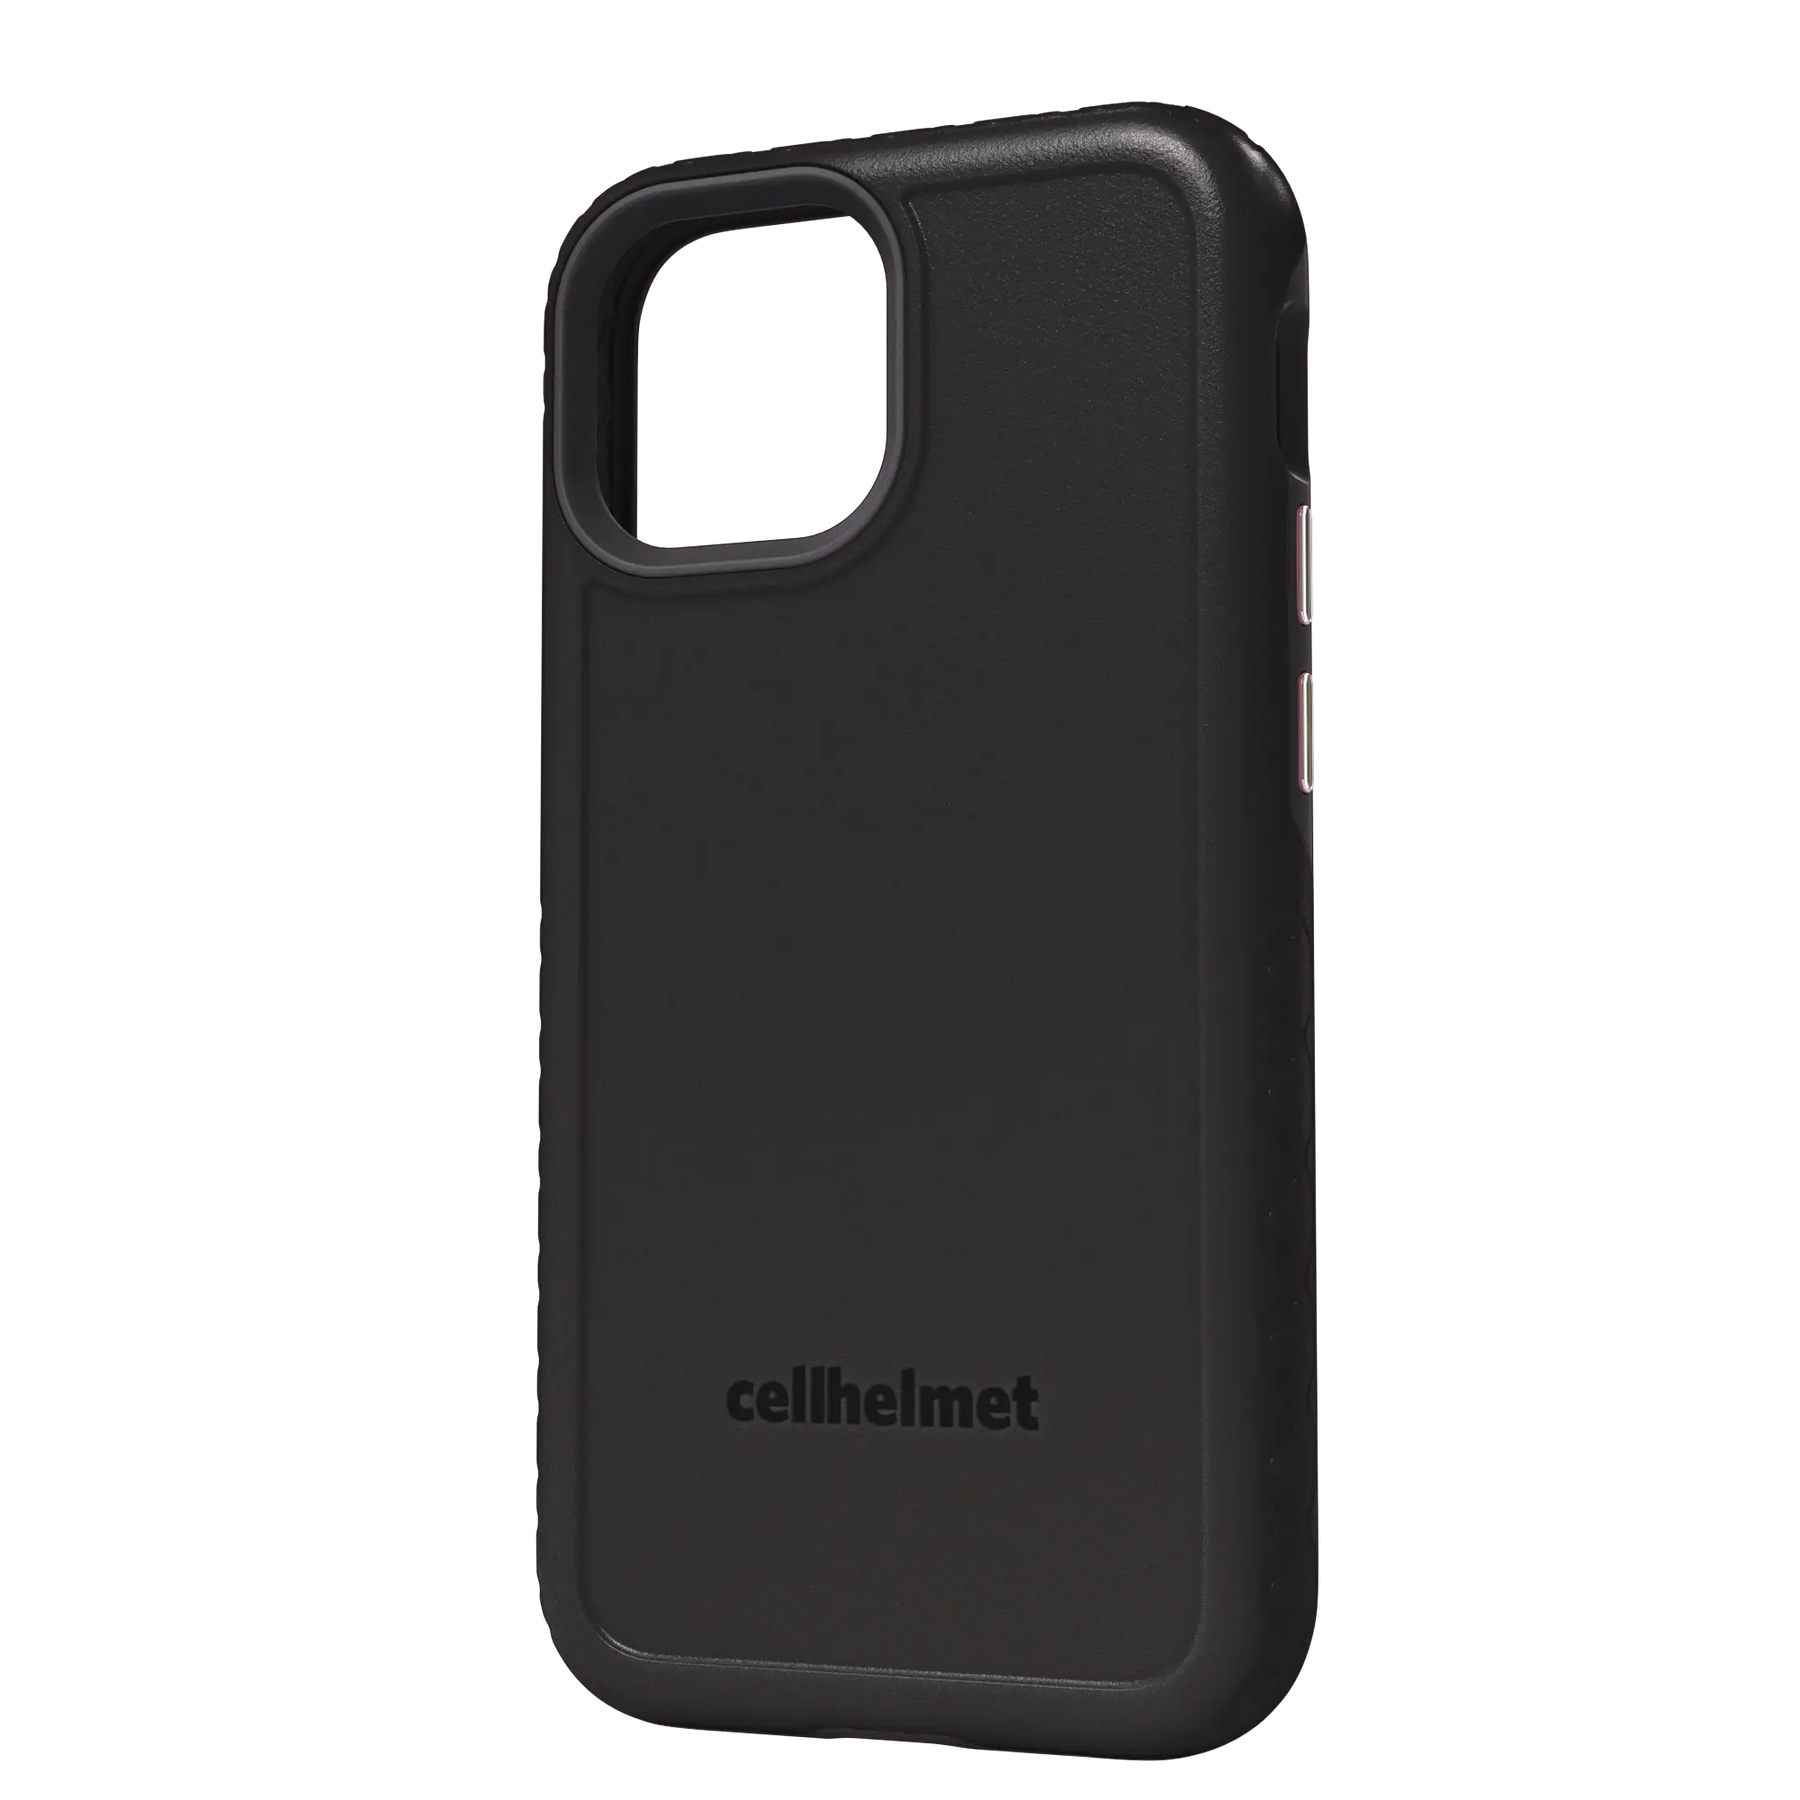 Black cellhelmet Customizable Case for iPhone 13 Mini